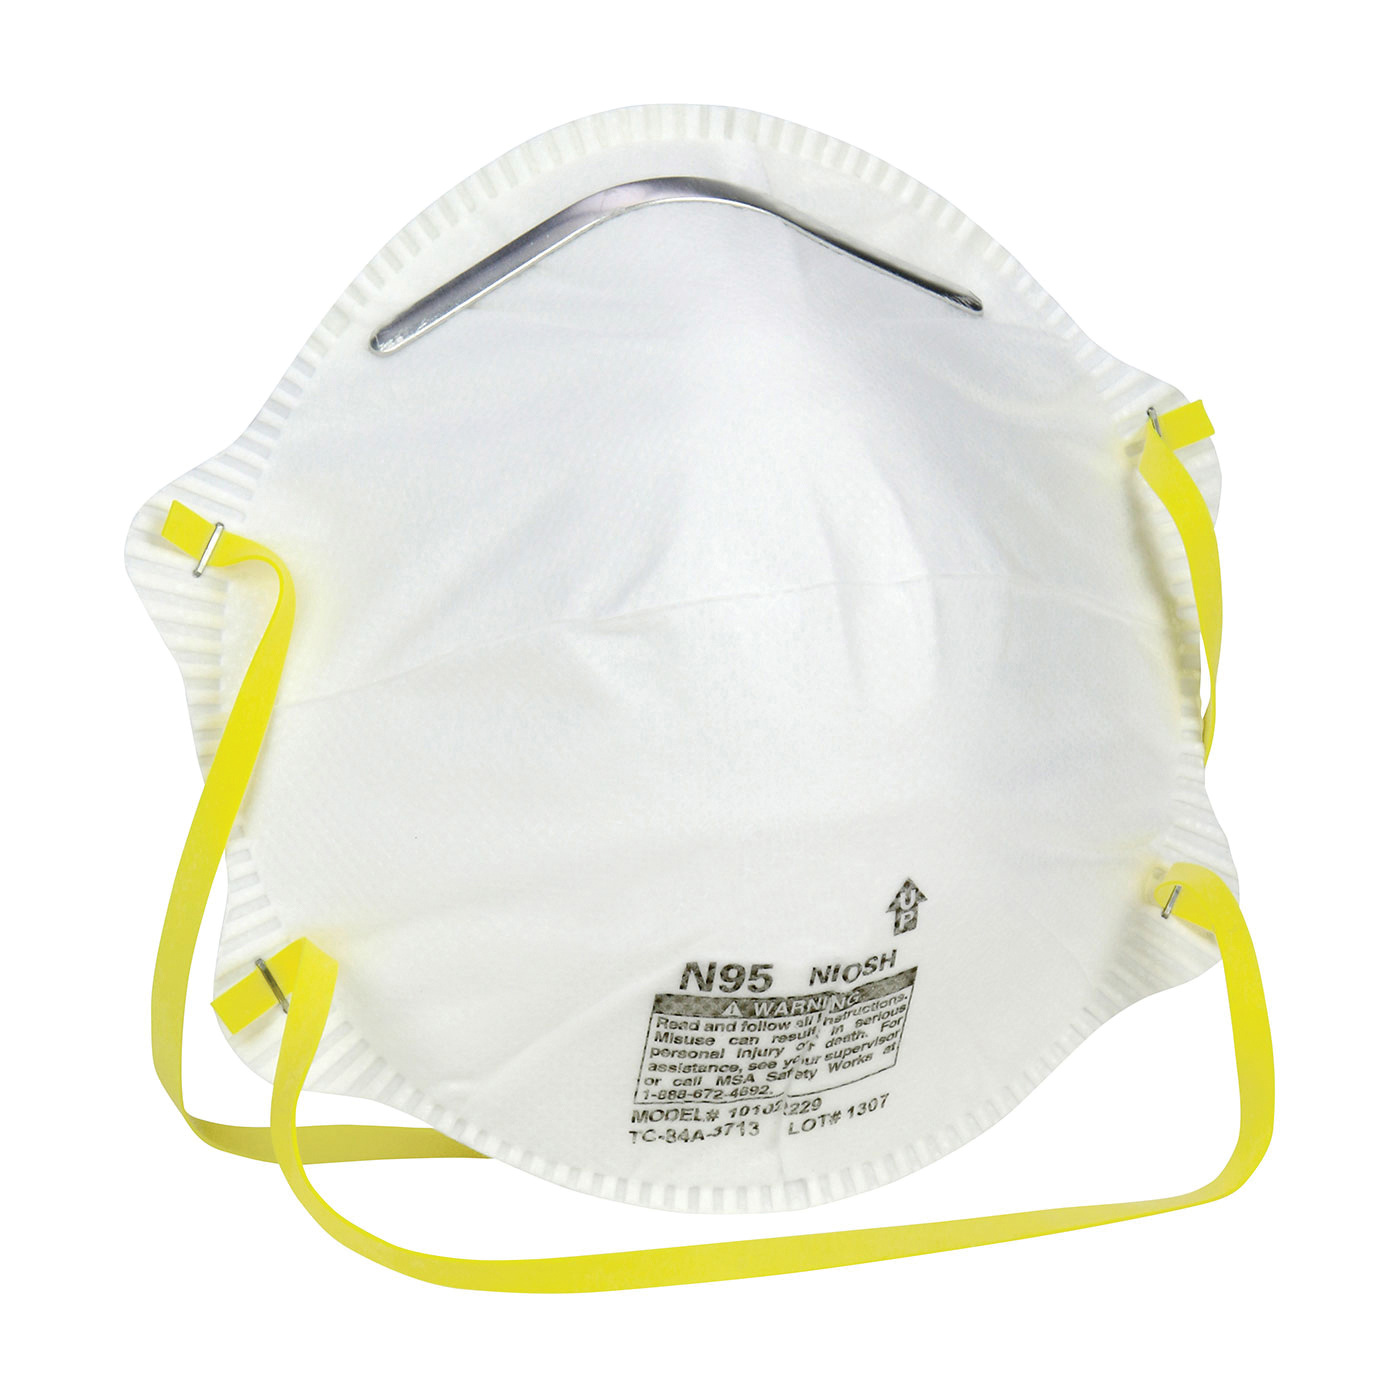 PIP® 10102481 N95 Harmful Dust Disposable Respirator, Universal